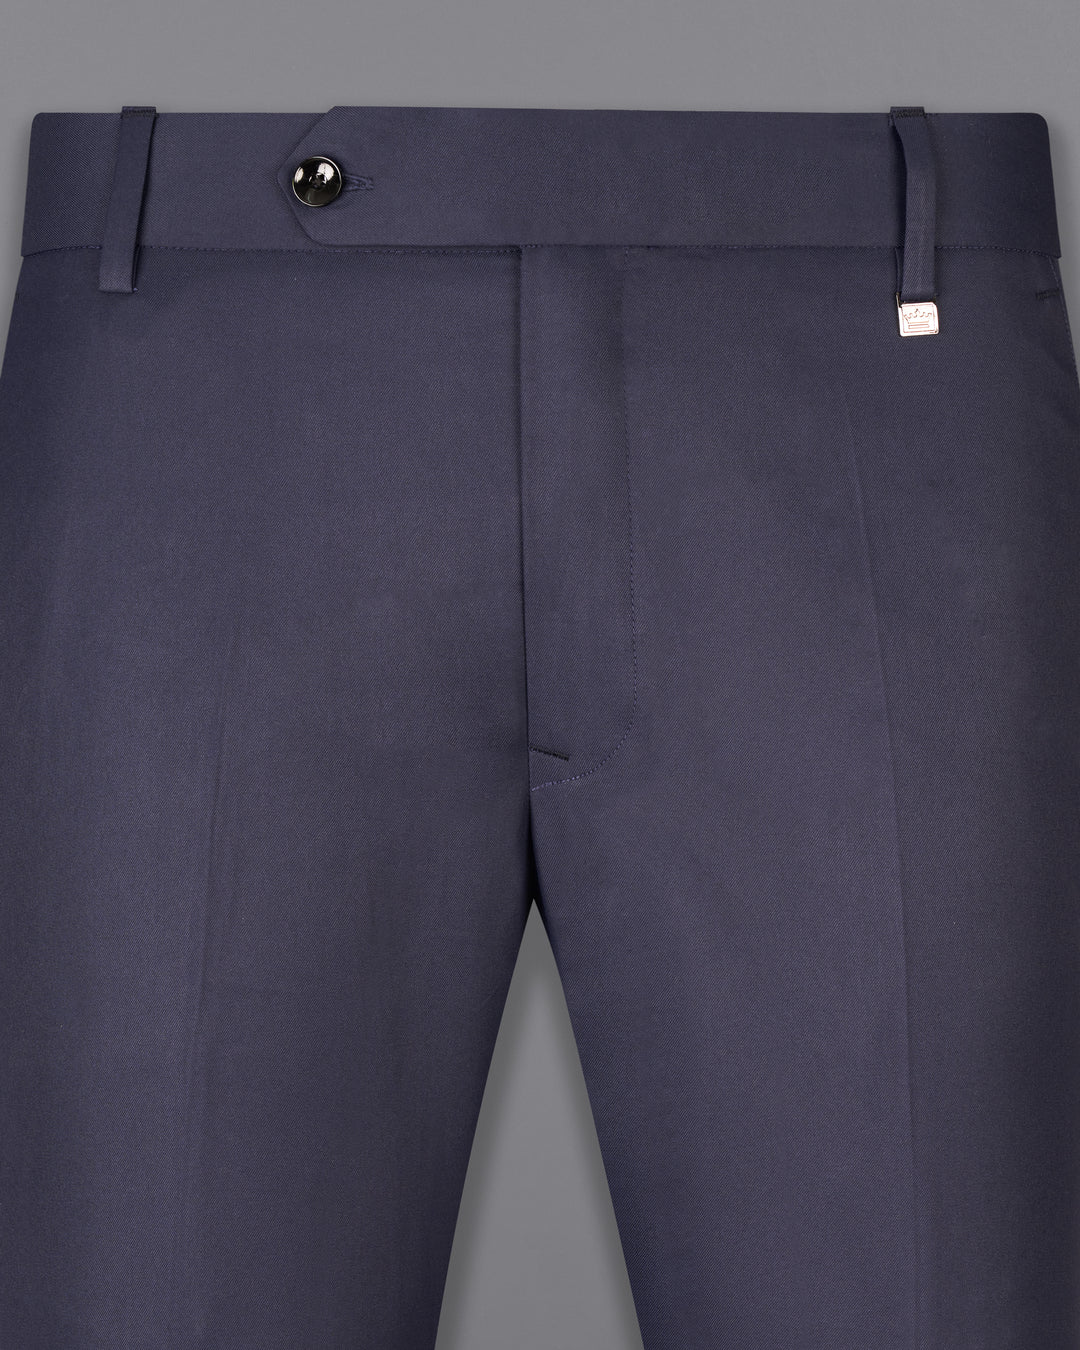 Blue Pant Matching Shirt - Buy Blue Pant Matching Shirt online in